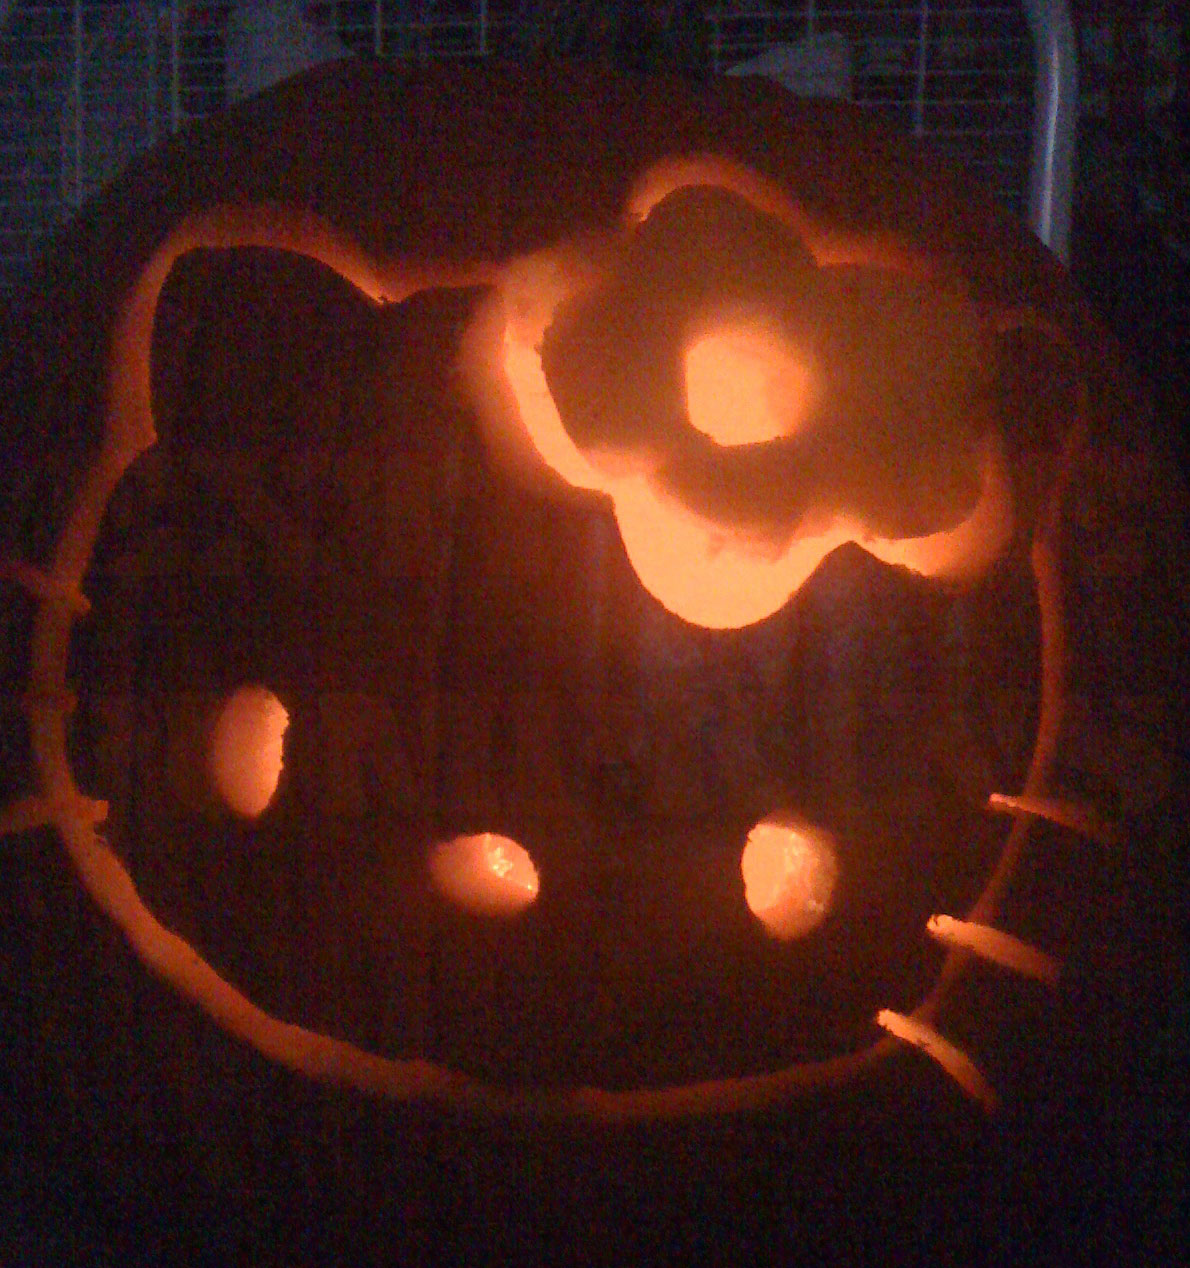 The Hello Kitty Pumpkin - Truly Frightening